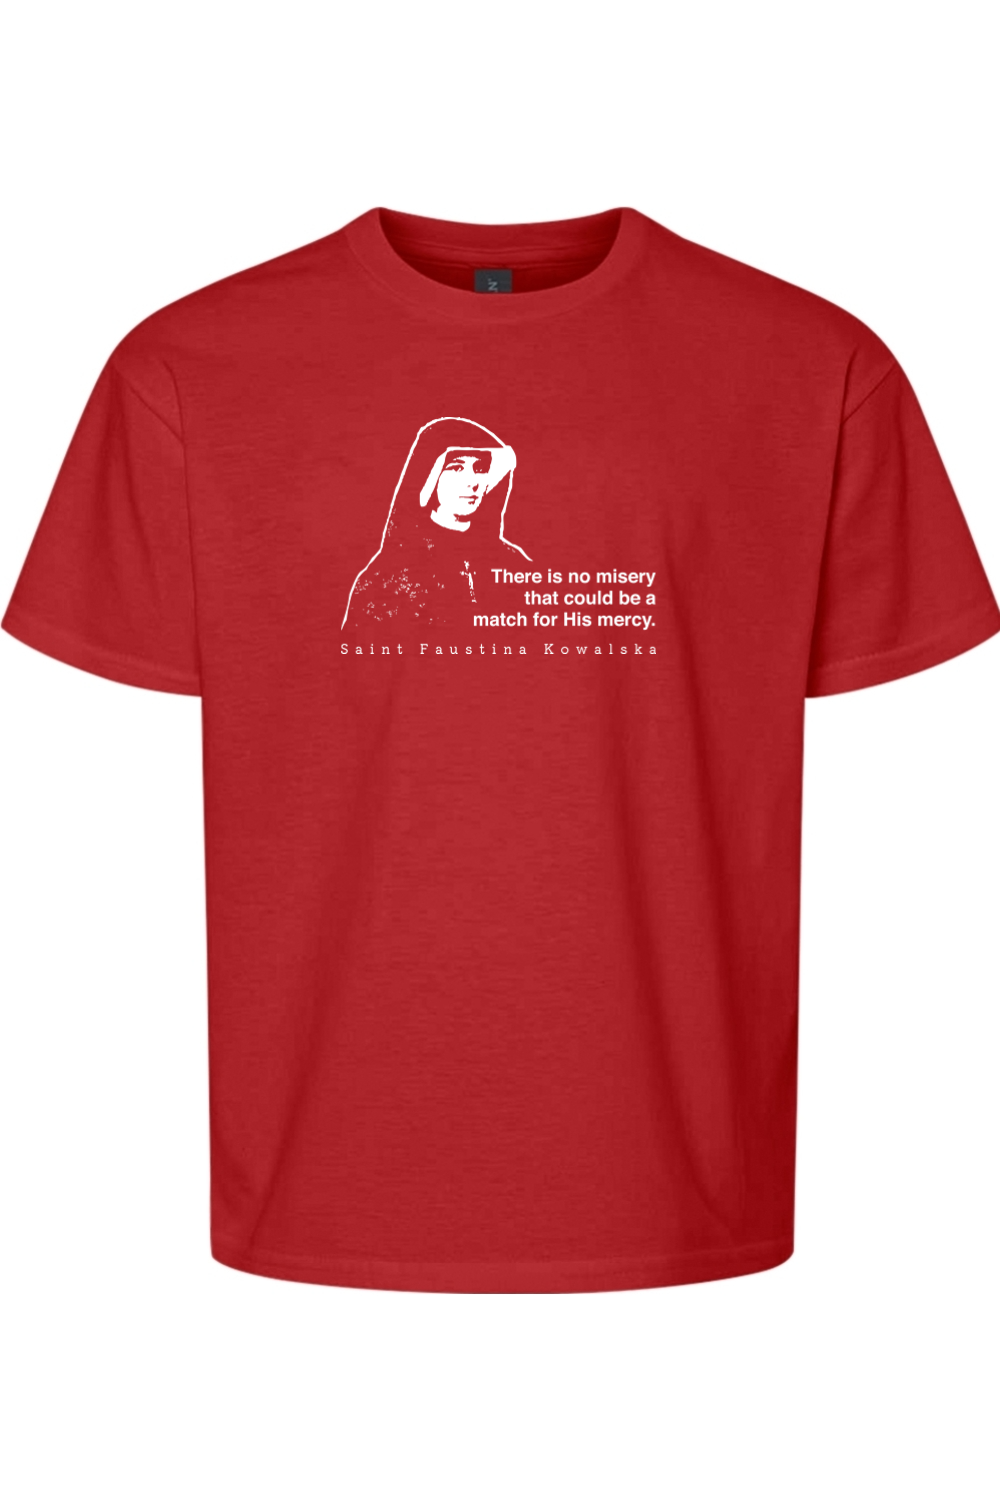 Mercy Message - St Faustina Kowalska Youth T-Shirt